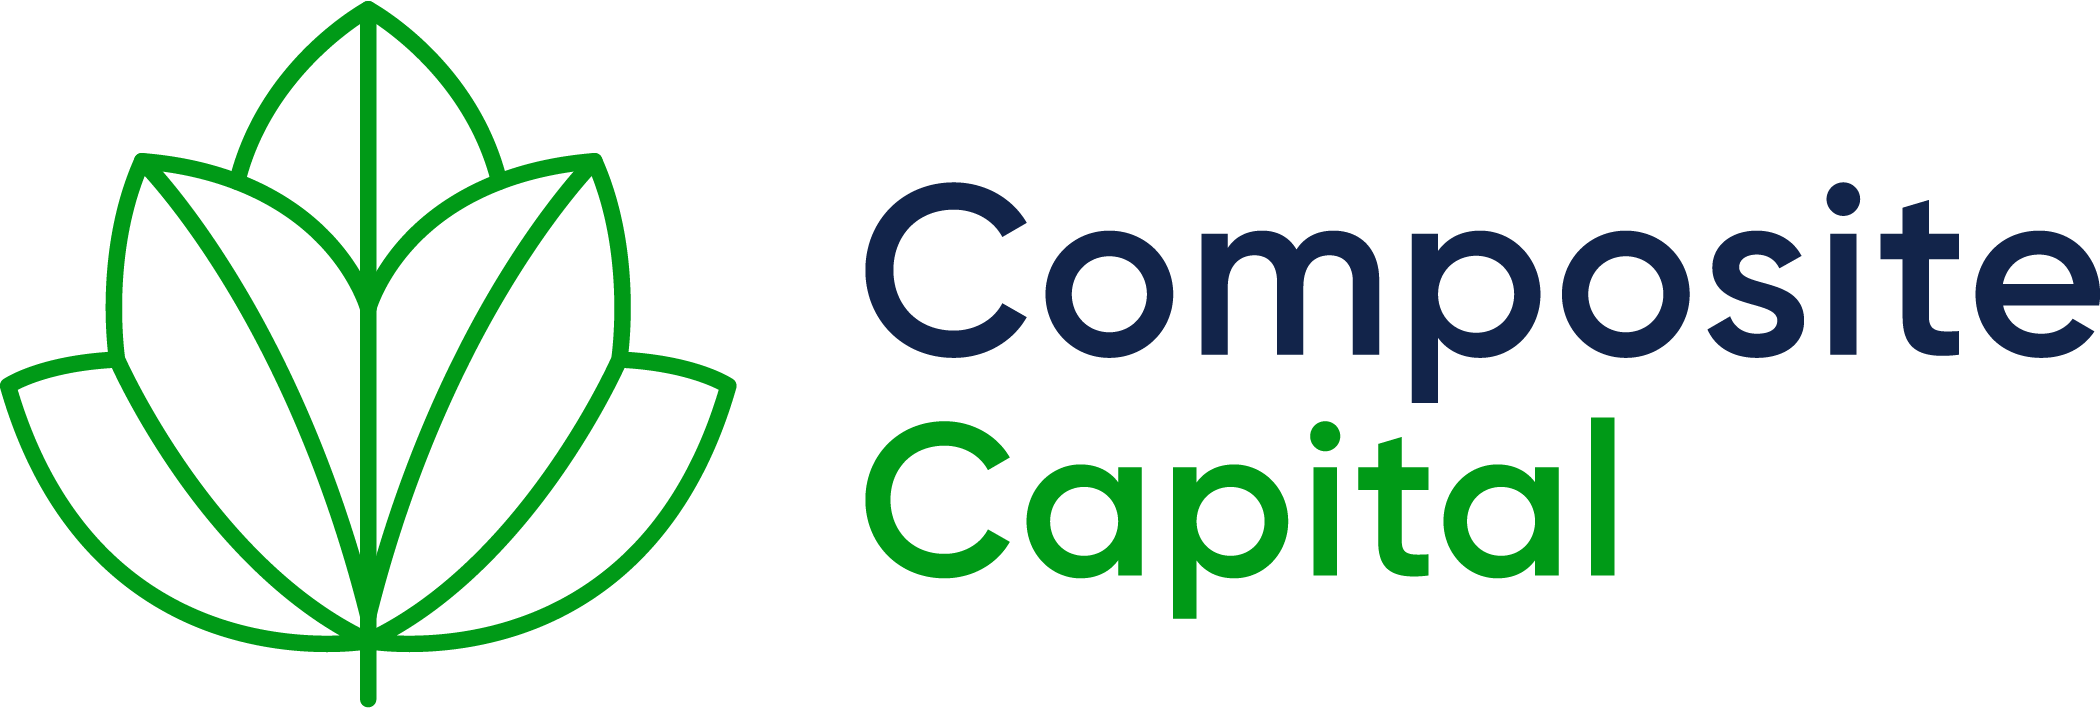 Composite Capital